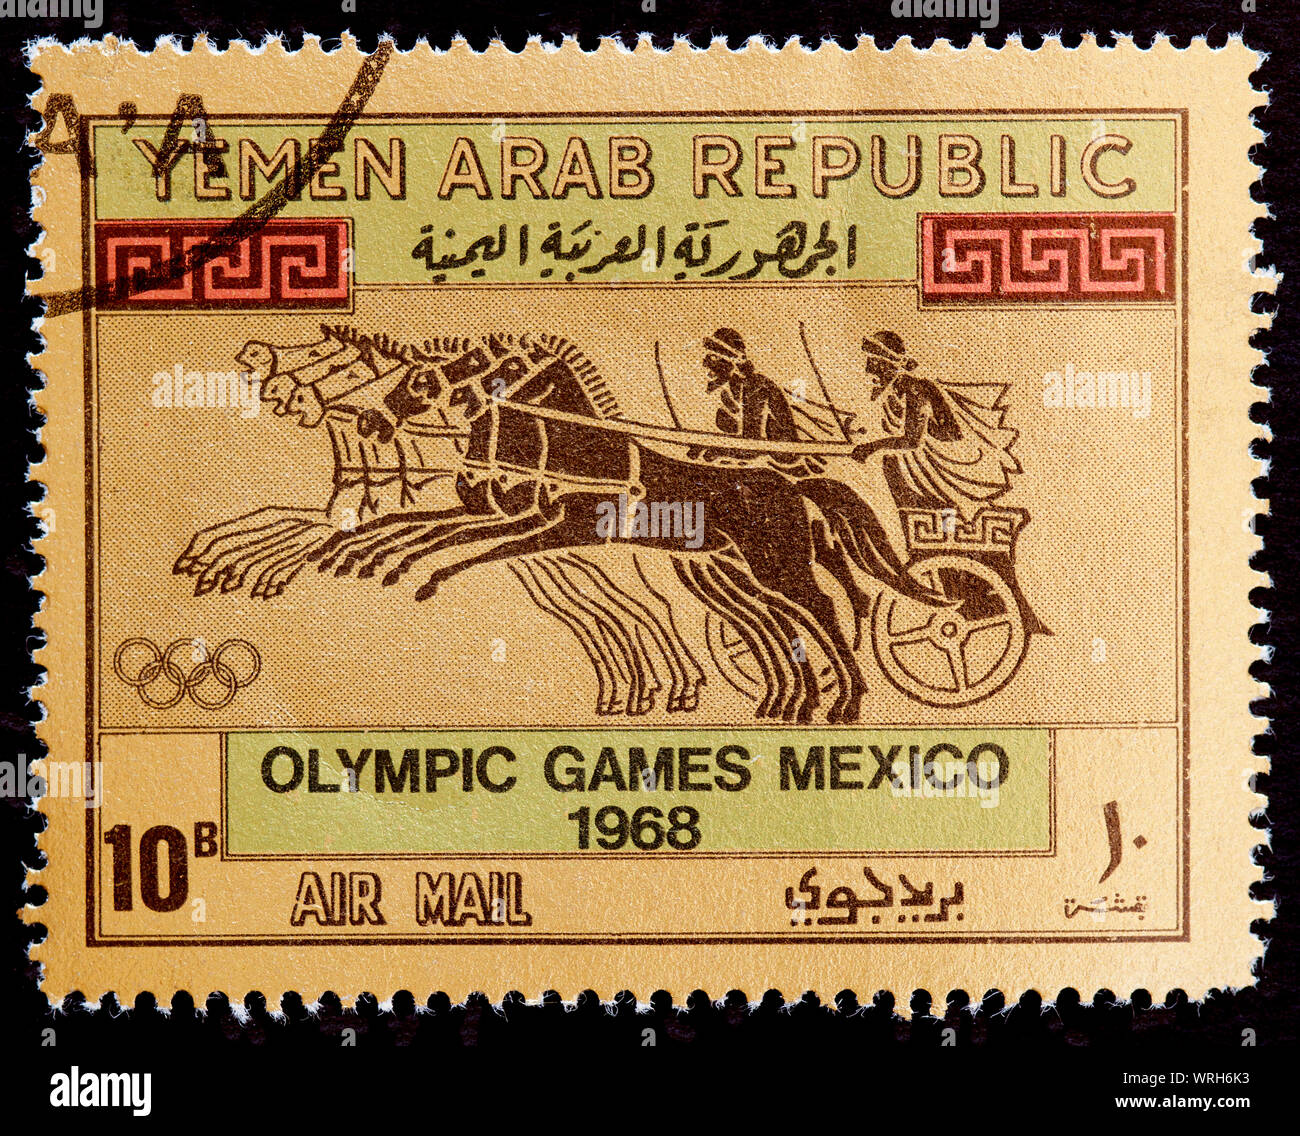 Yemen Arab Republic Postage Stamp - Summer Olympics 1968, Mexico City Stock Photo